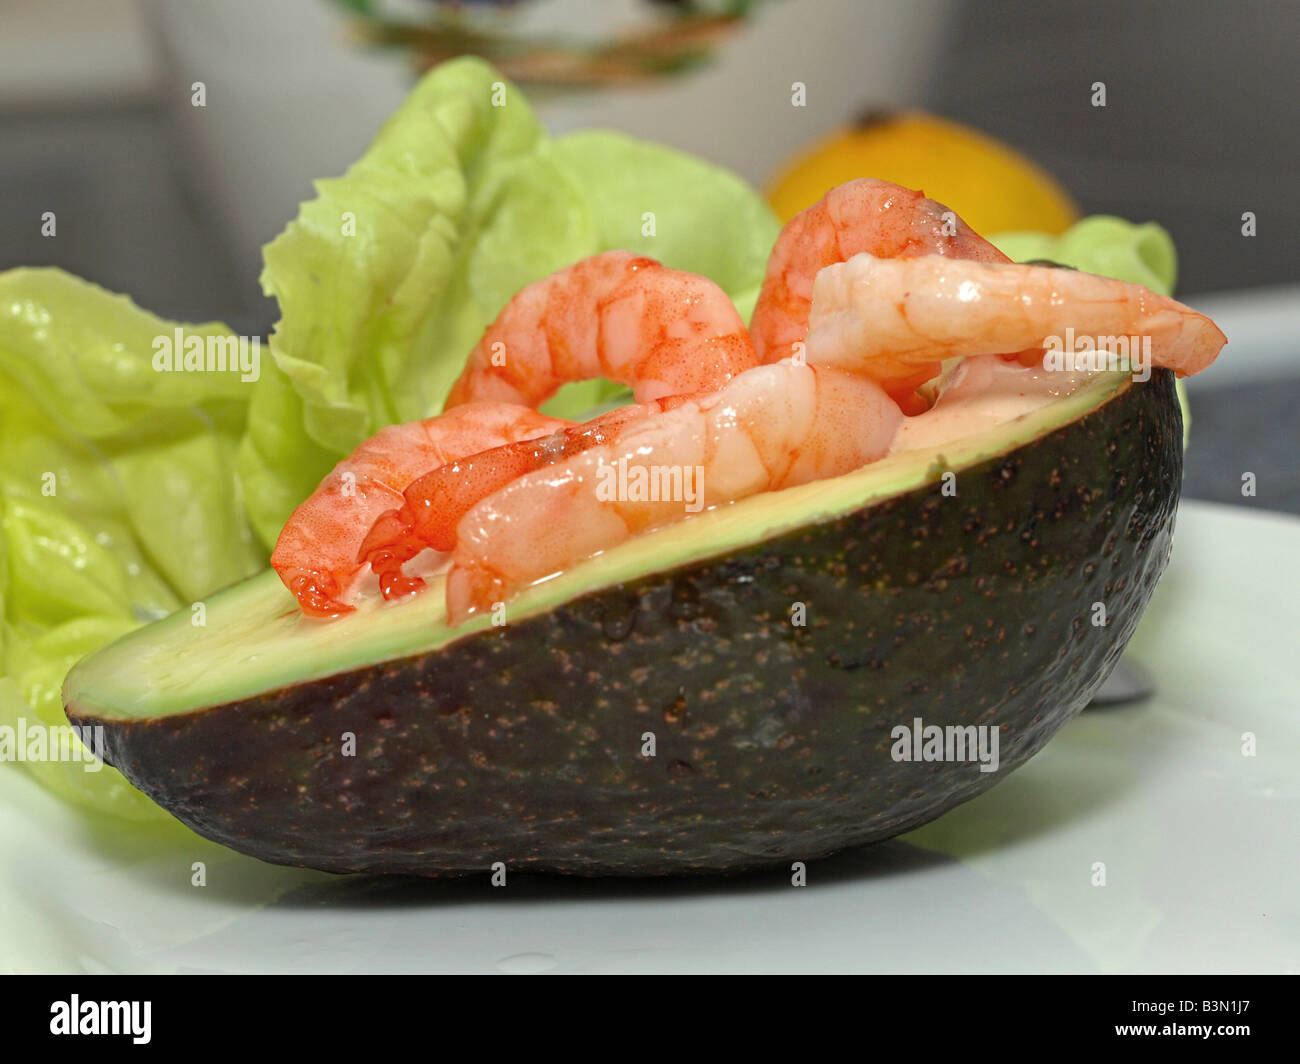 Avocado mit Garnelen / avocado with shrimps Stock Photo